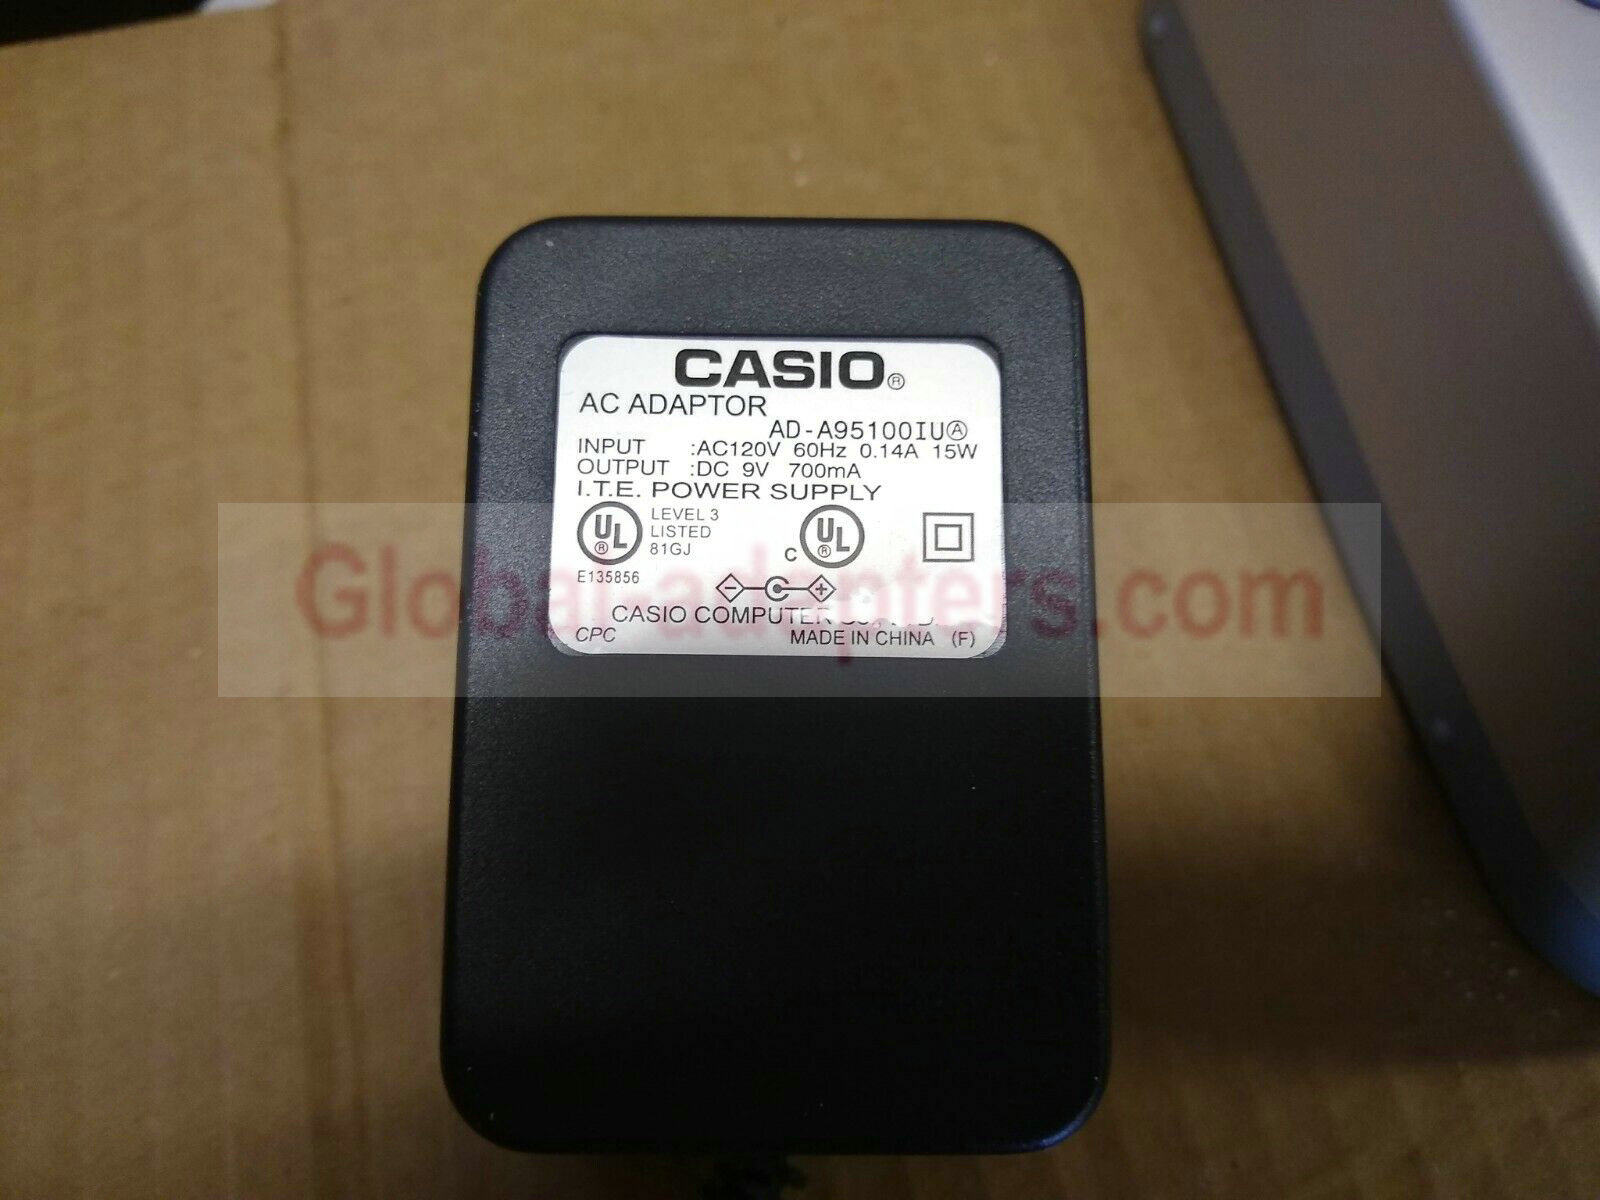 New 9V 700mA Casio AD-A95100IU Power Supply Ac Adapter